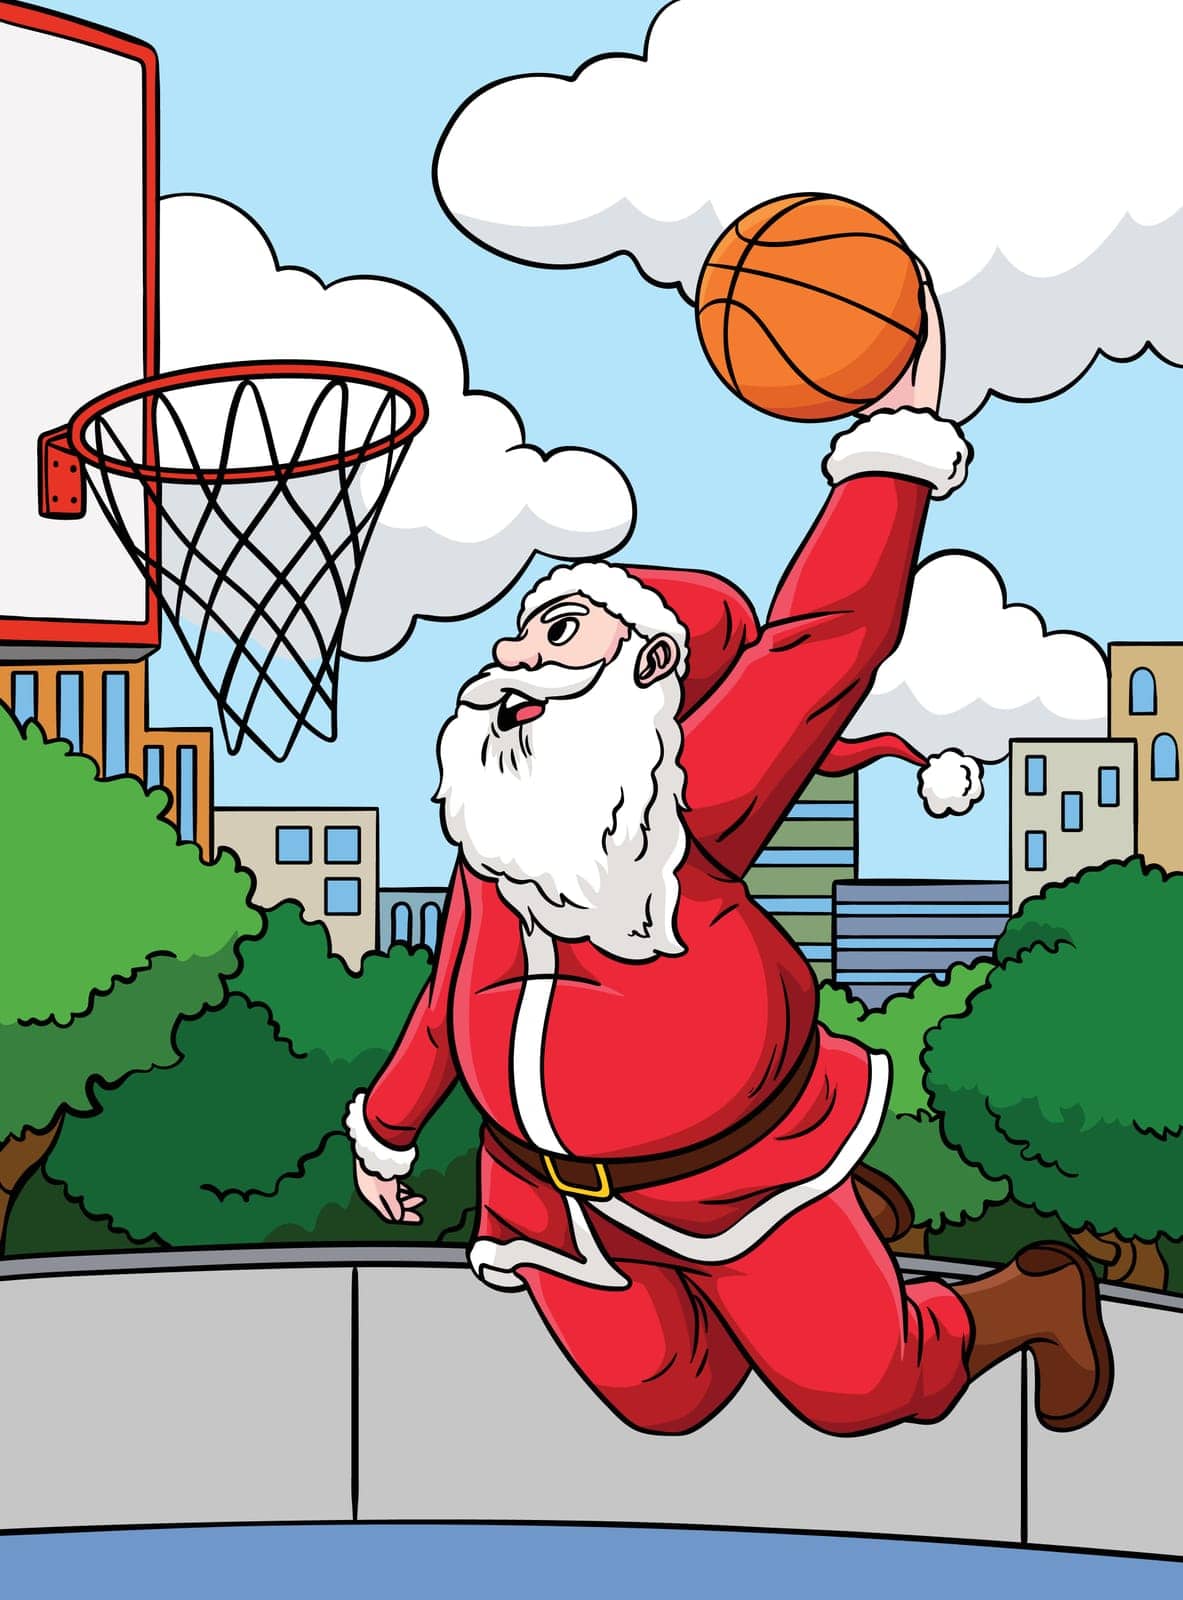 This cartoon clipart shows a Basketball Santa Slam Dunk illustration.